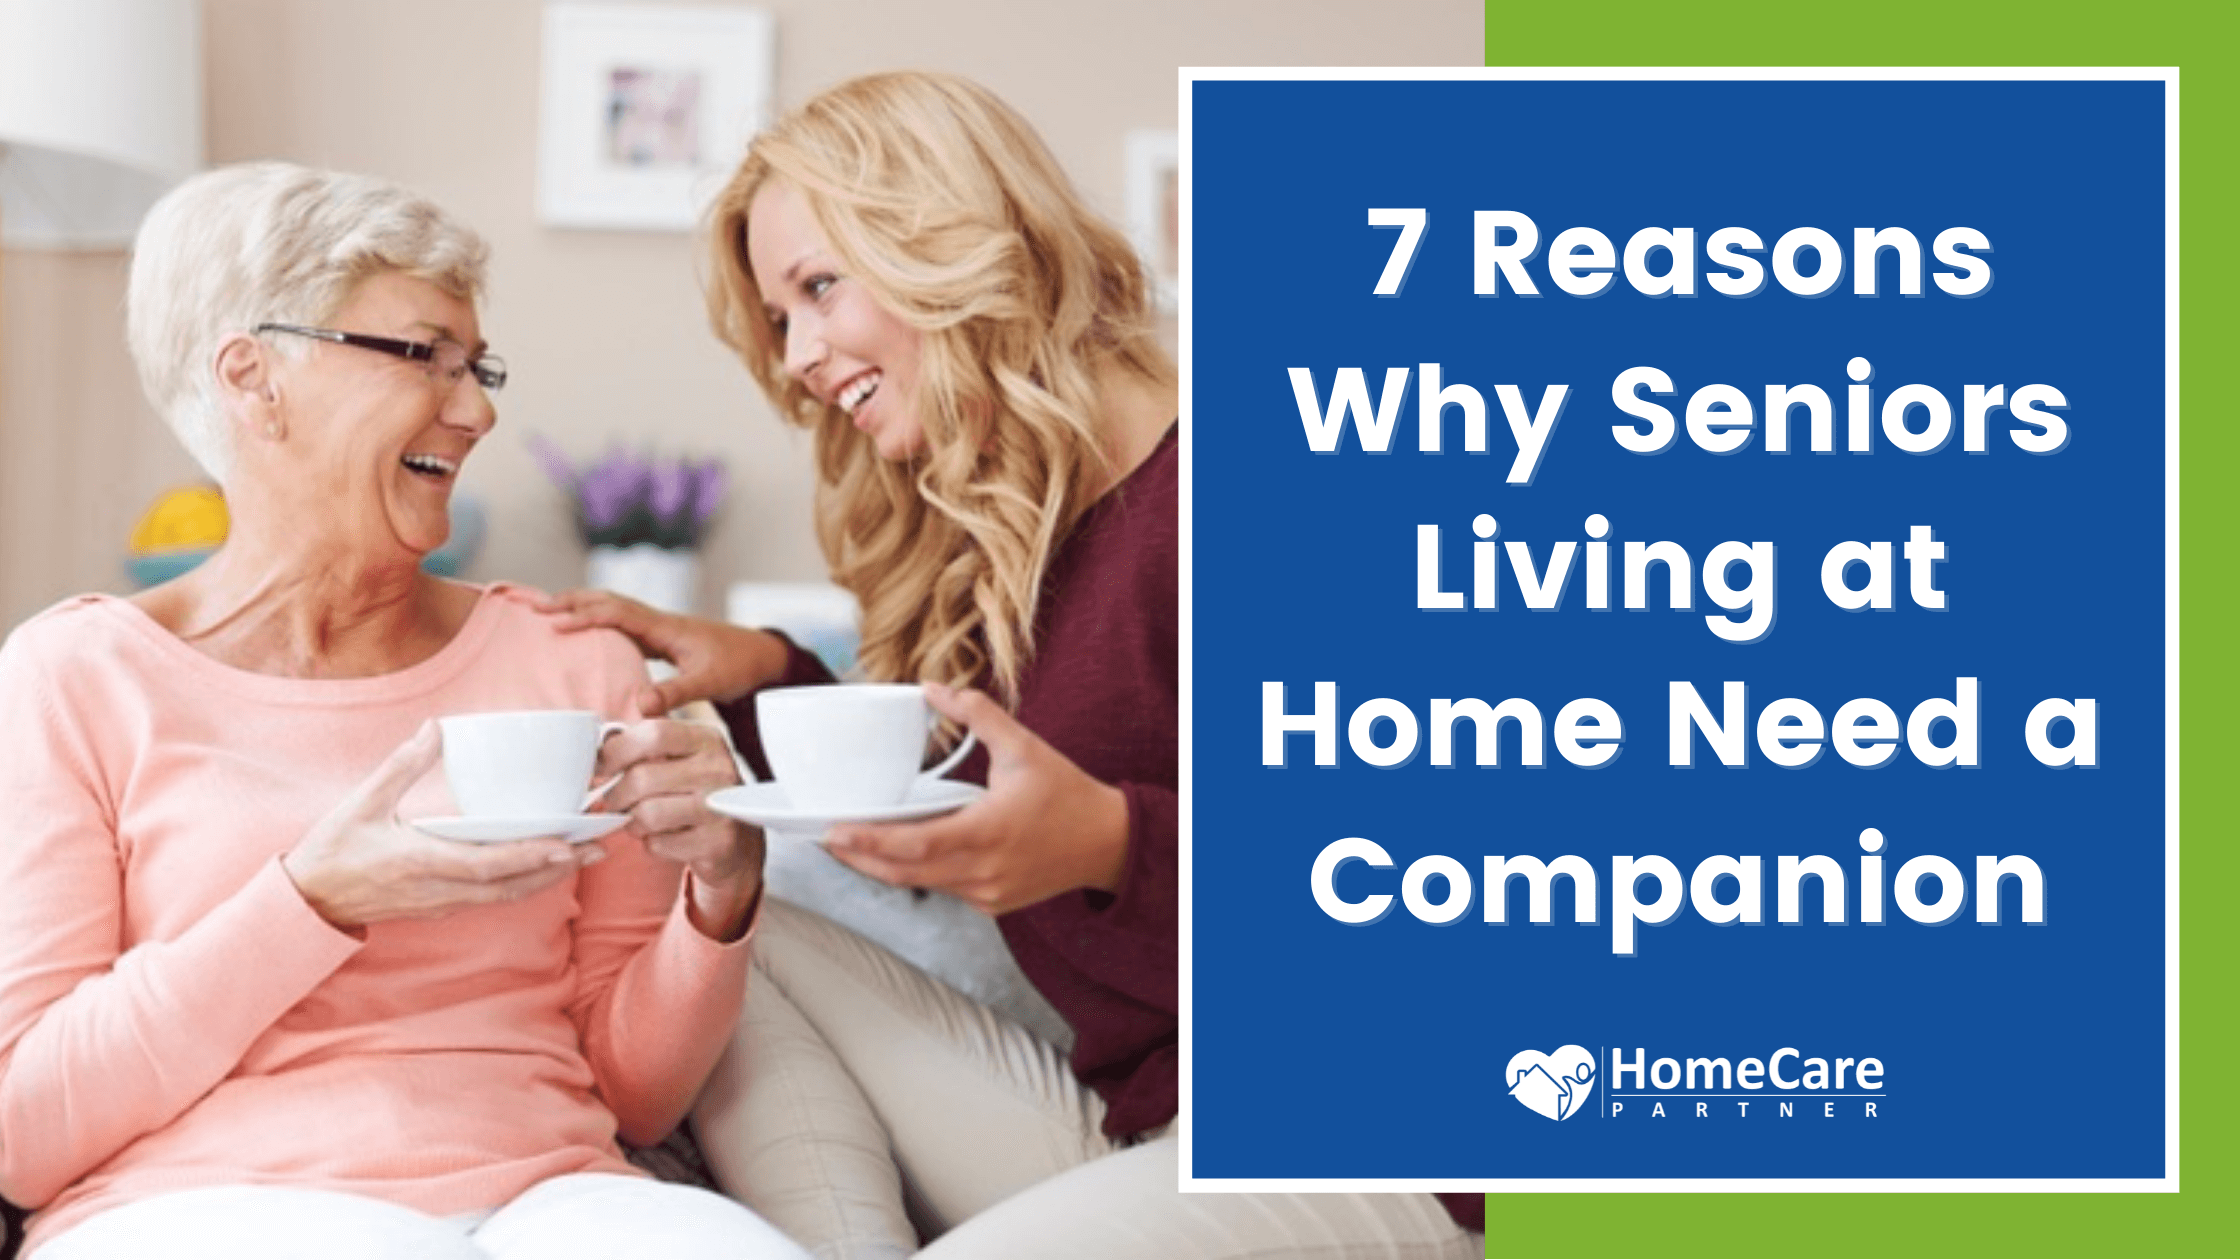 7 Reasons Why Seniors Living at Home Need a Companion